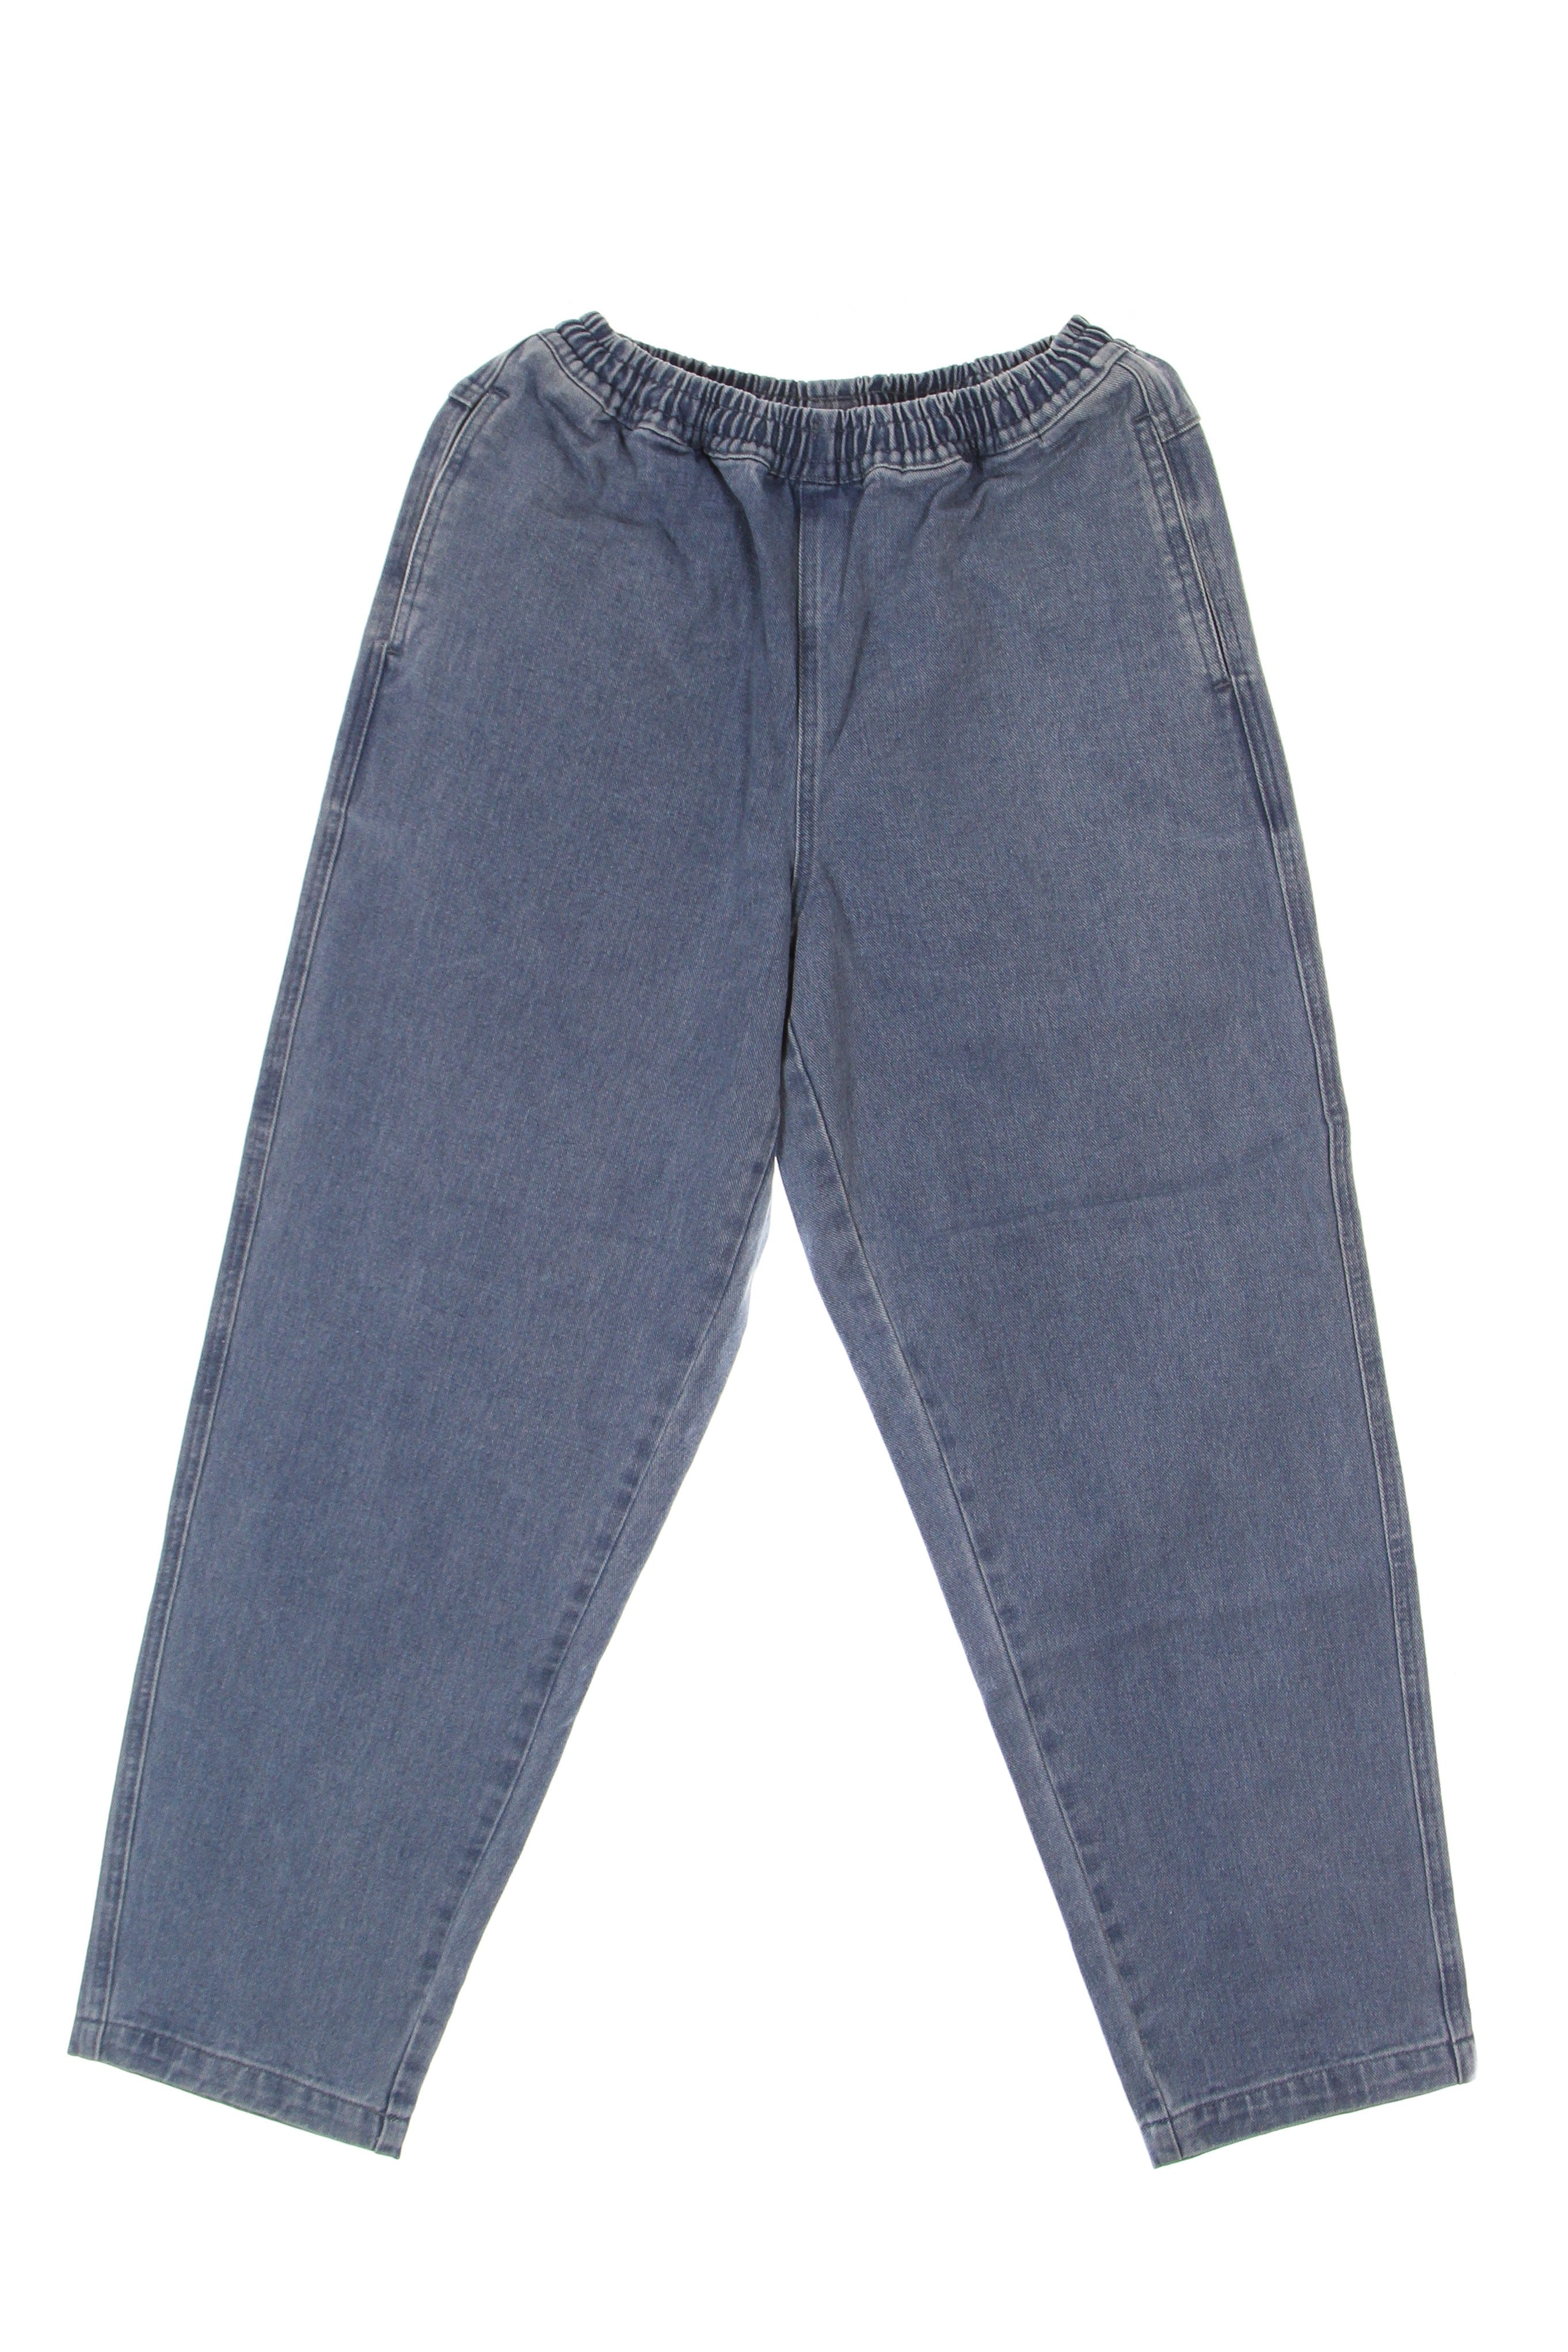 Men's Jeans Local Pant